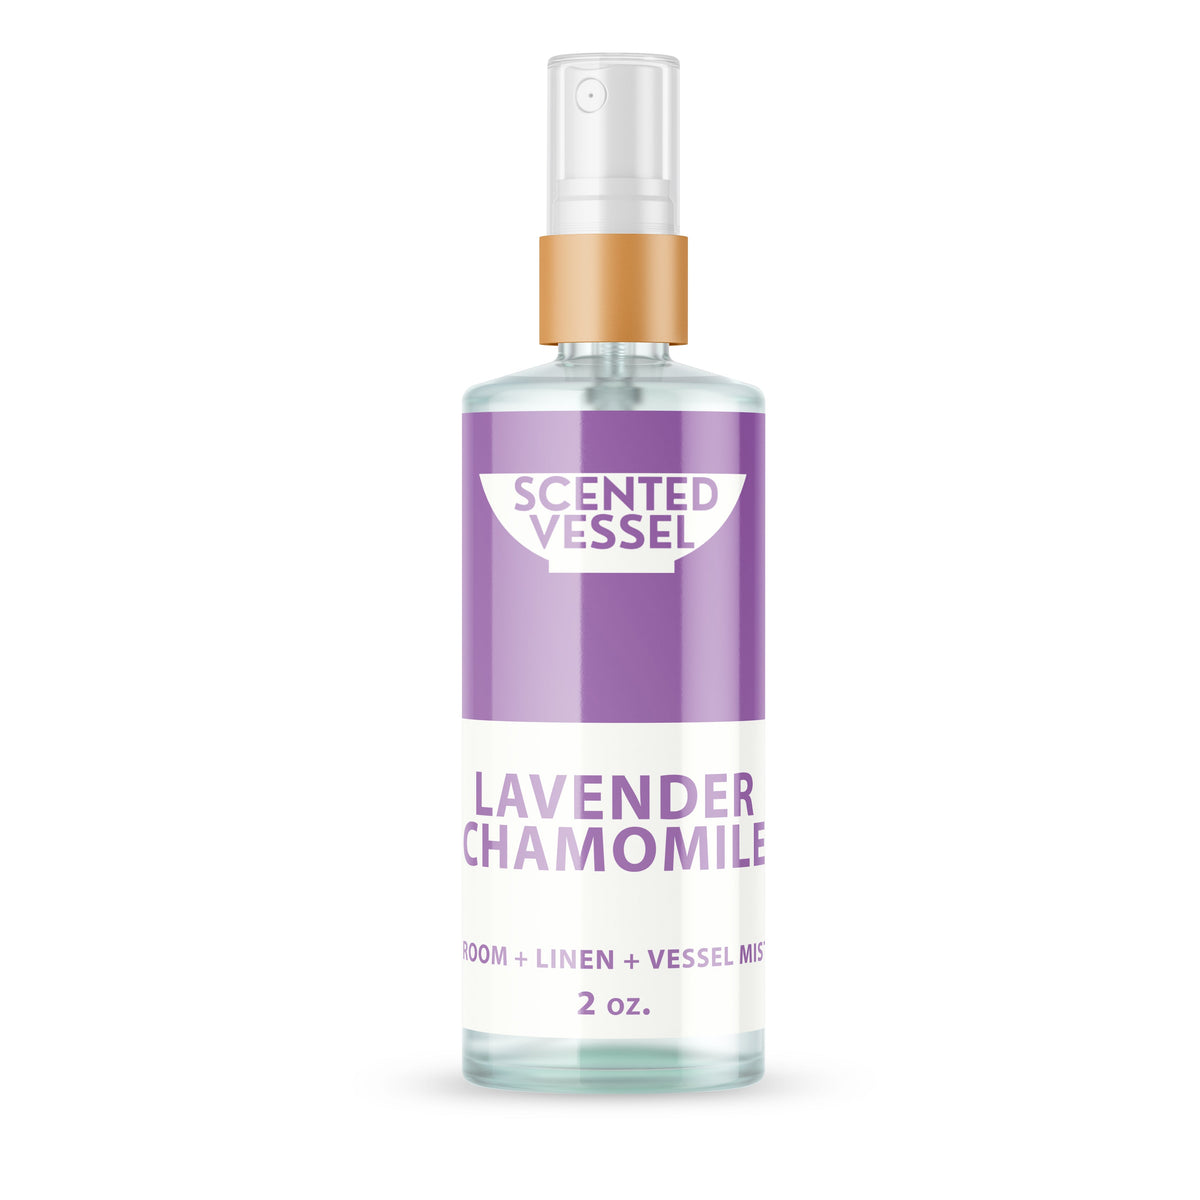 Lavender Chamomile 2oz Fragrance Mist by Scented Vessel